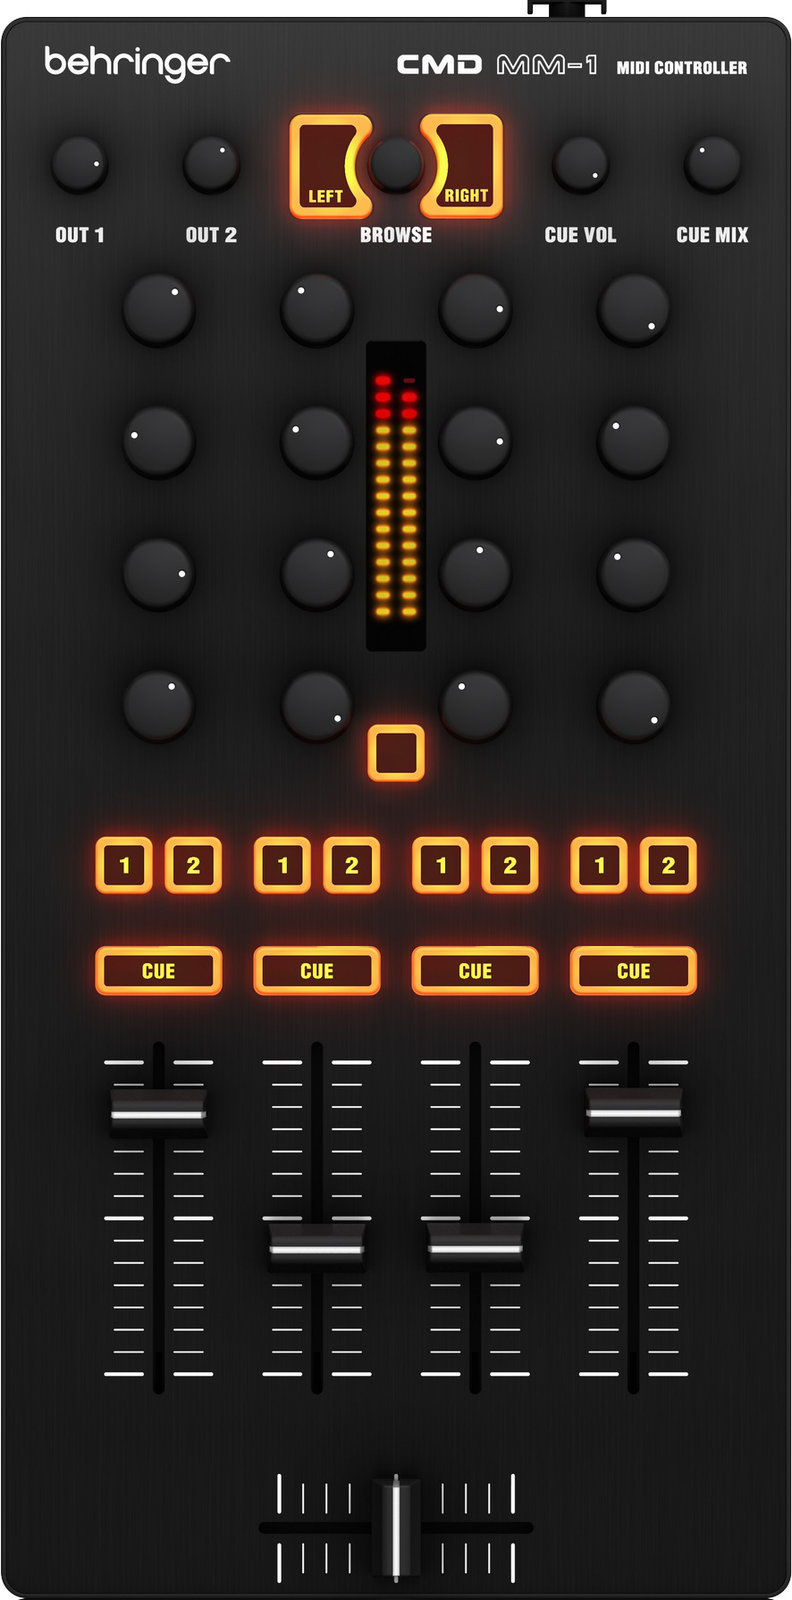 MIDI kontroler Behringer CMD MM-1